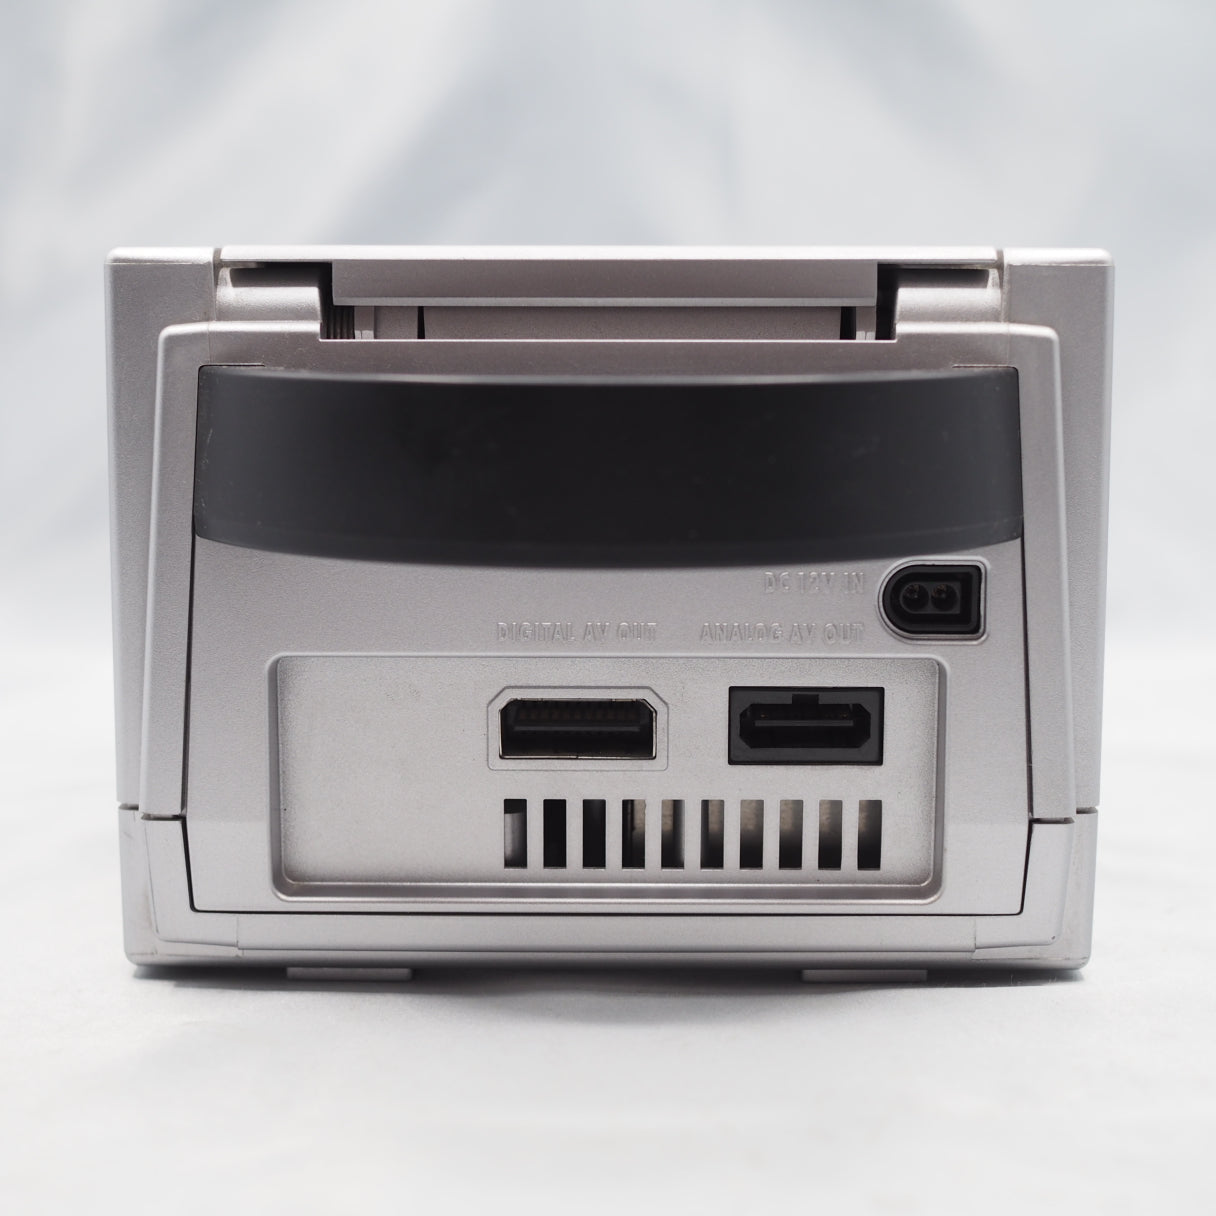 Nintendo GameCube Silver Console Enjoy Plus DOL-001